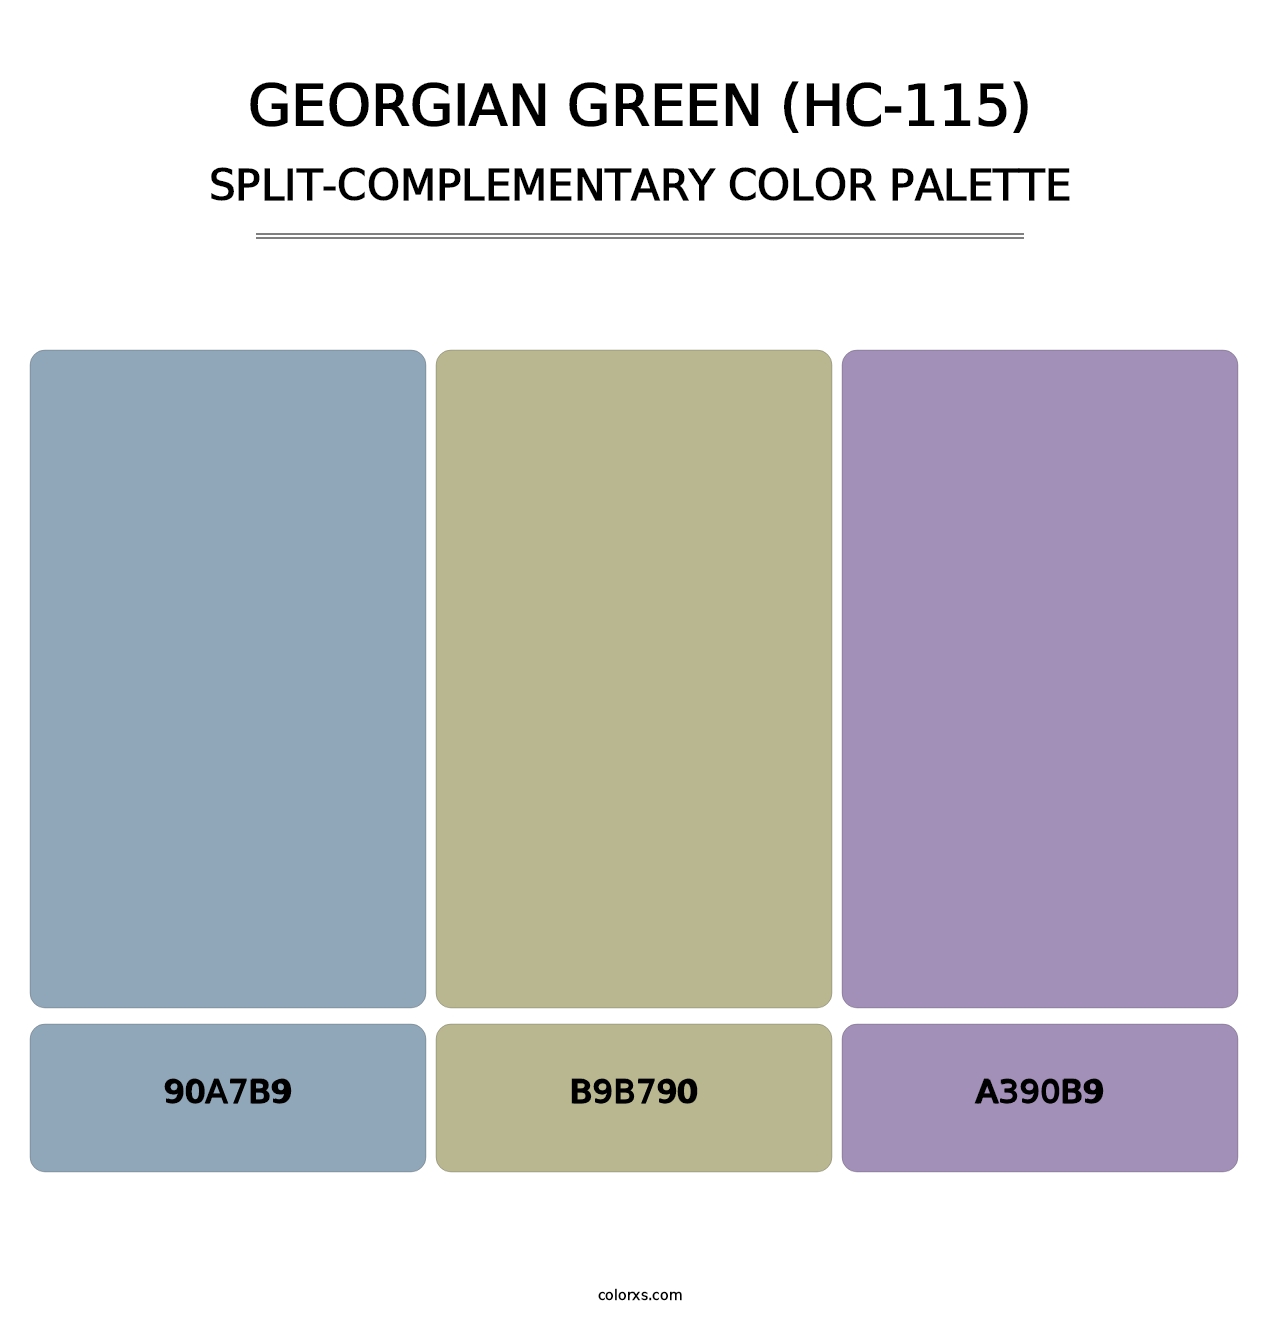 Georgian Green (HC-115) - Split-Complementary Color Palette